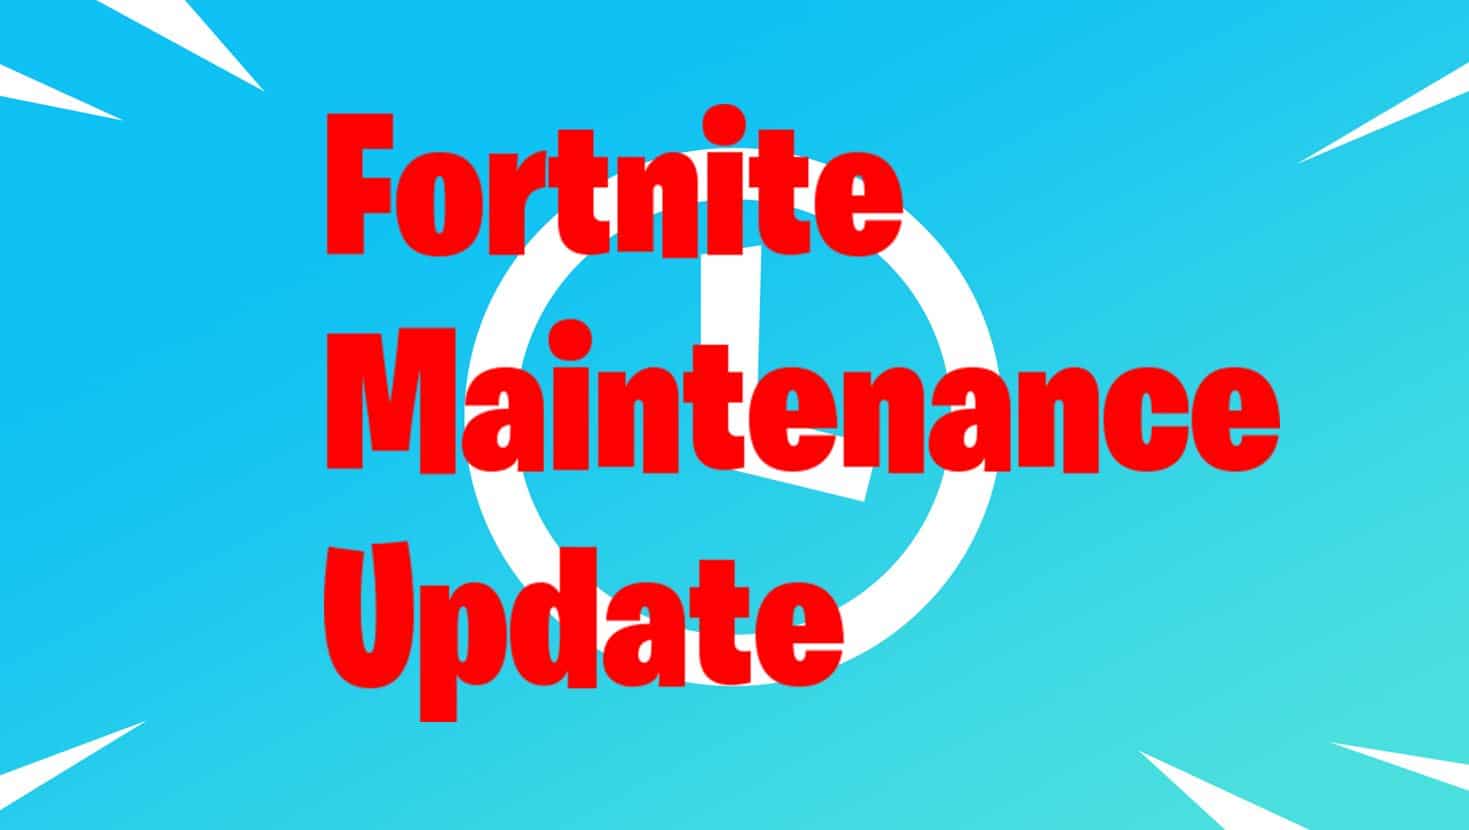 Next Fortnite Update